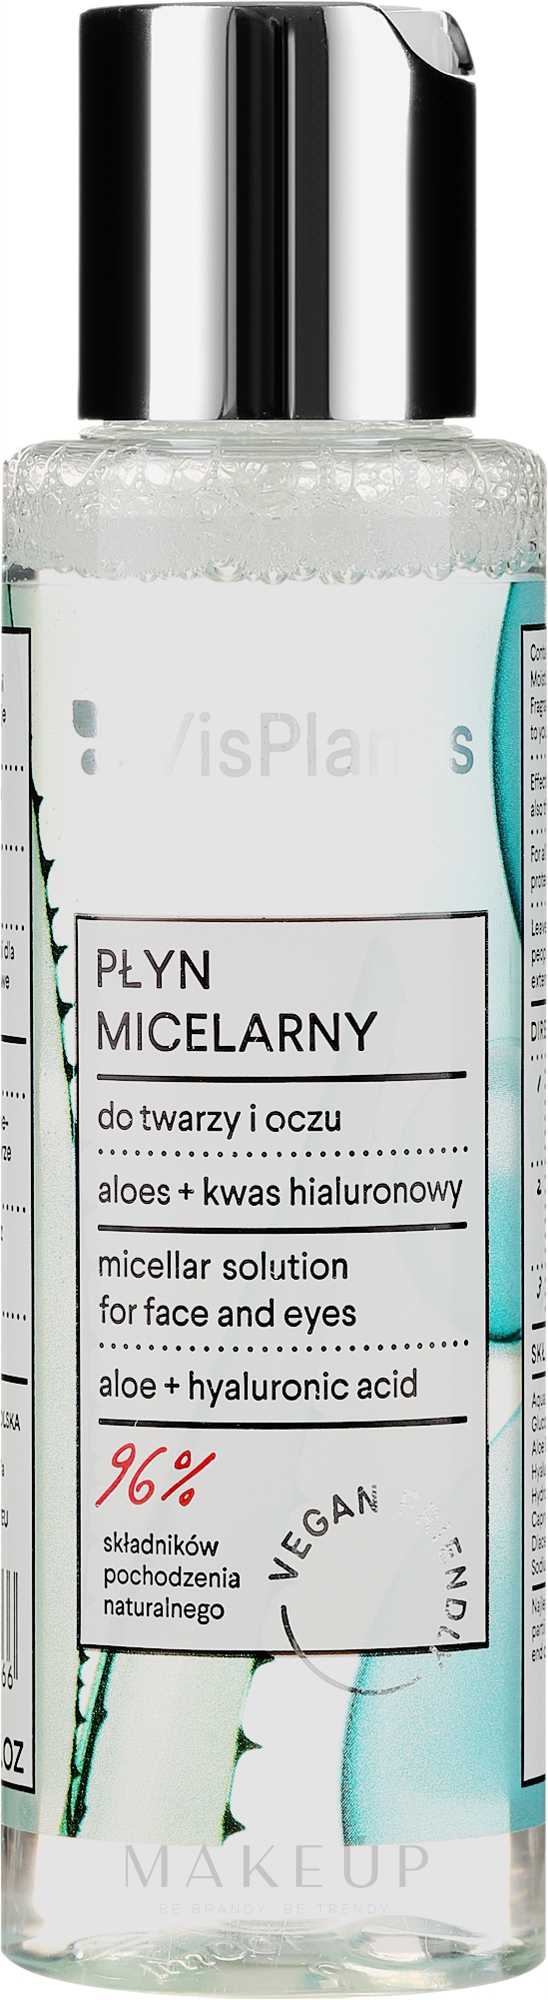 3in1 Mizellenwasser mit Aloe - Vis Plantis Herbal Vital Care Micellar Solution 3in1 — Foto 100 ml